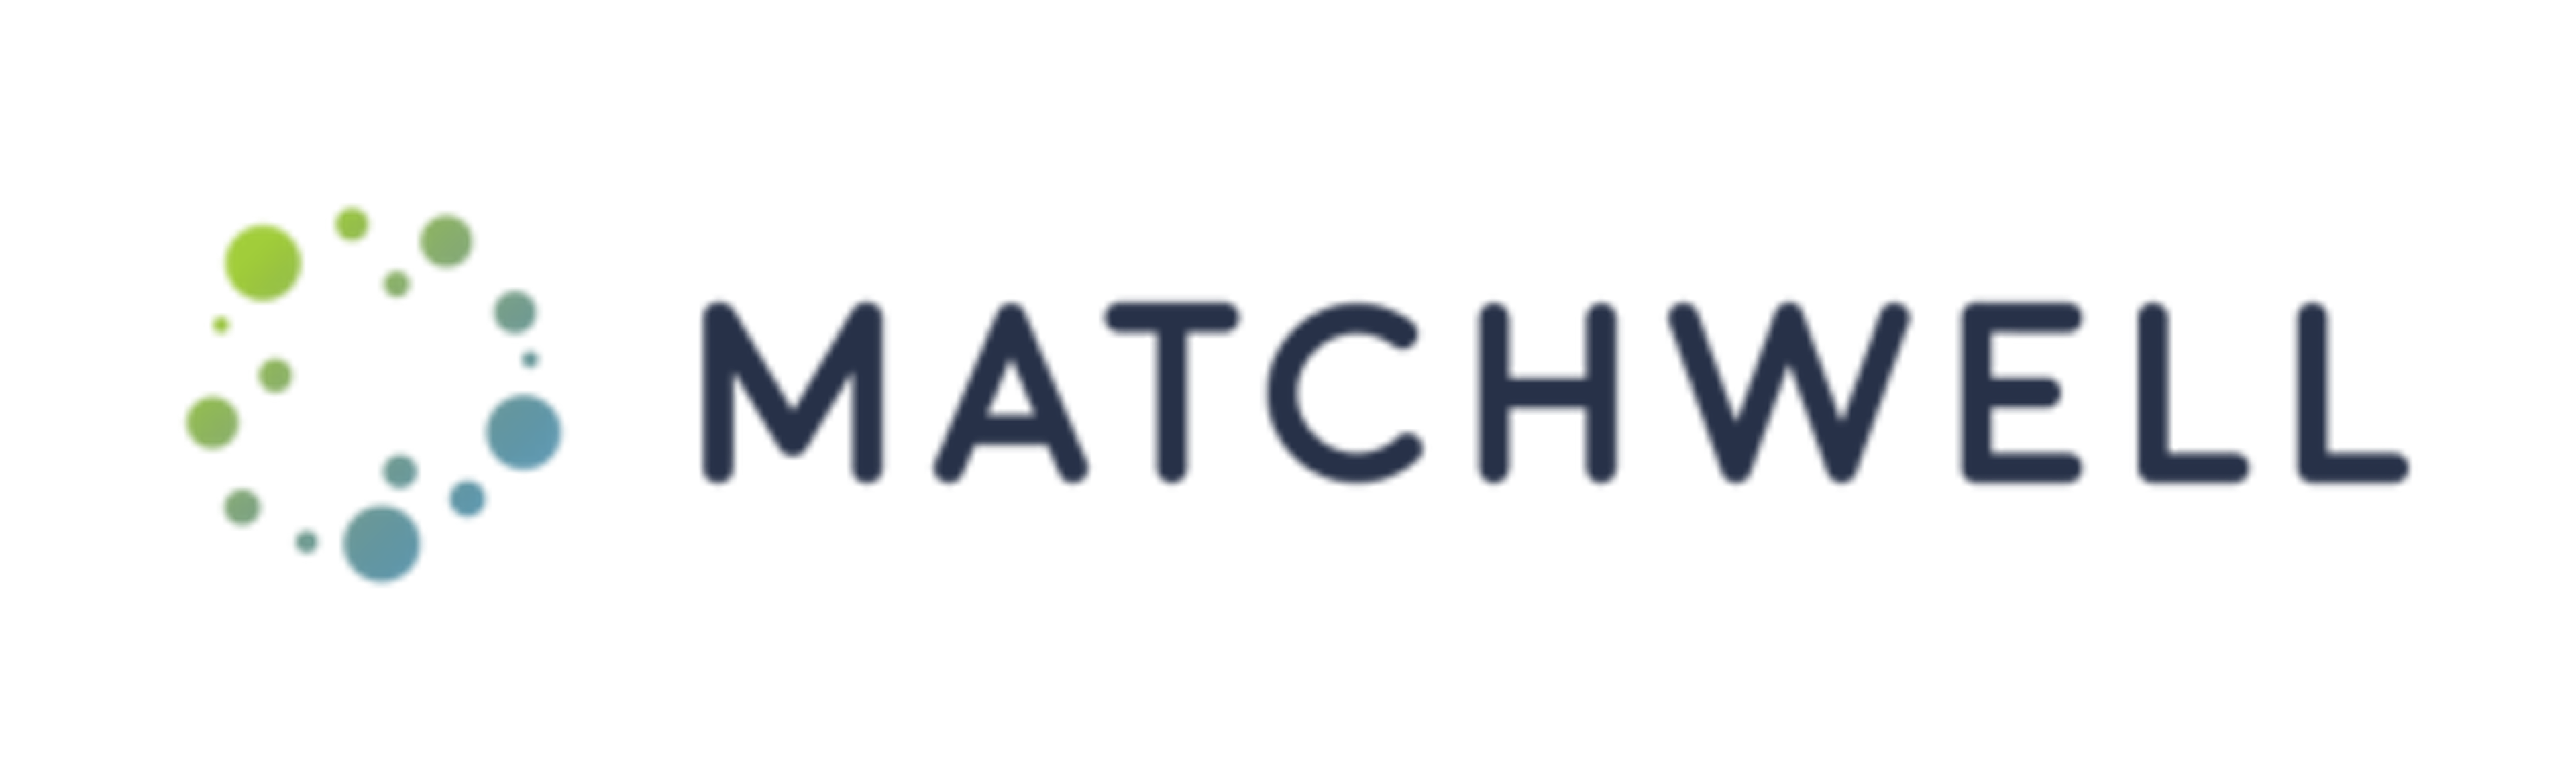 Matchwell logo